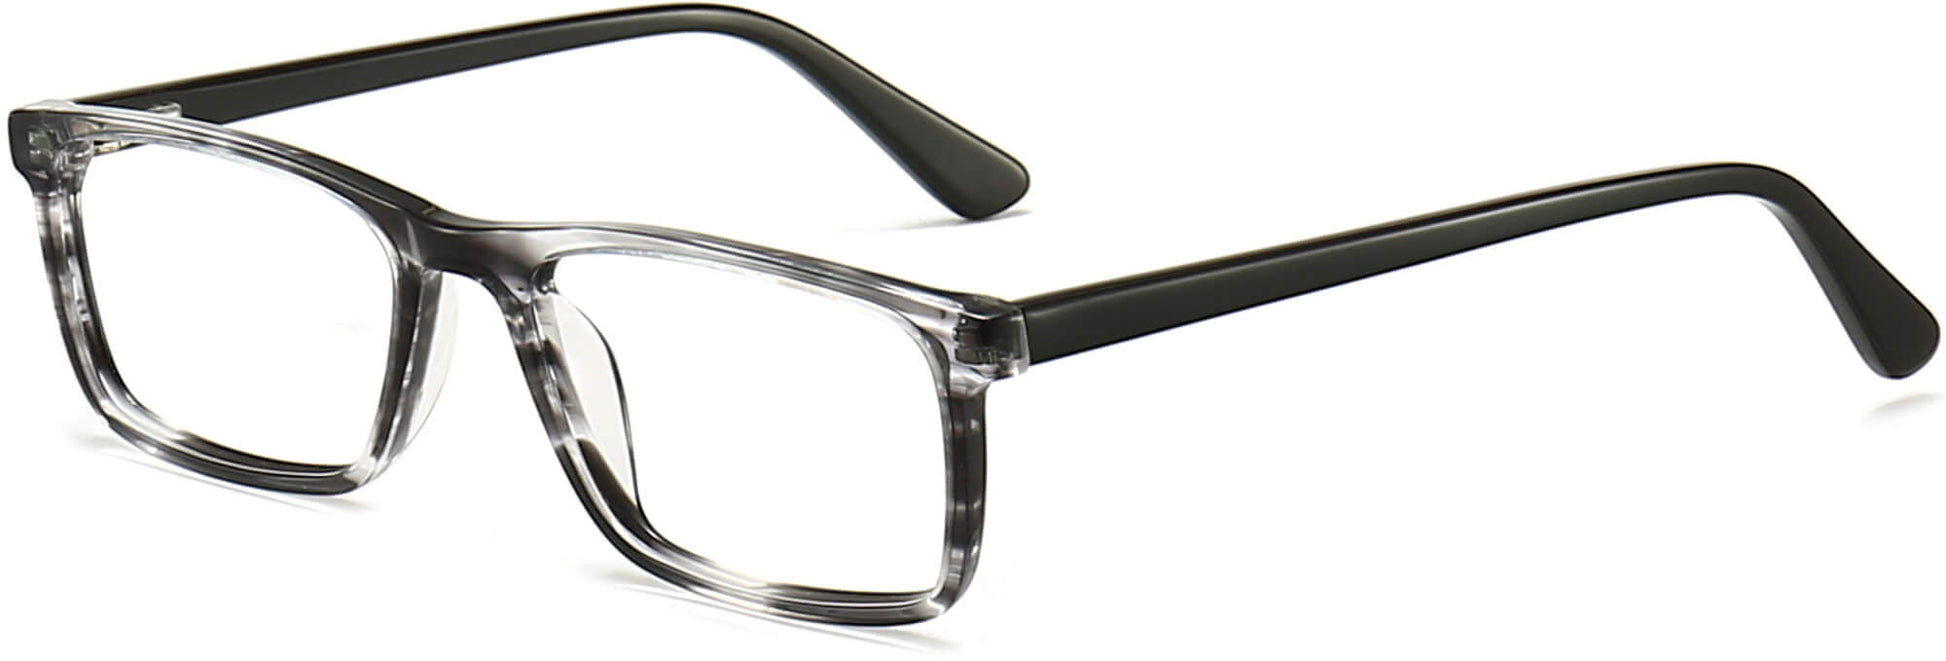 Trenton Rectangle Gray Eyeglasses from ANRRI, angle view